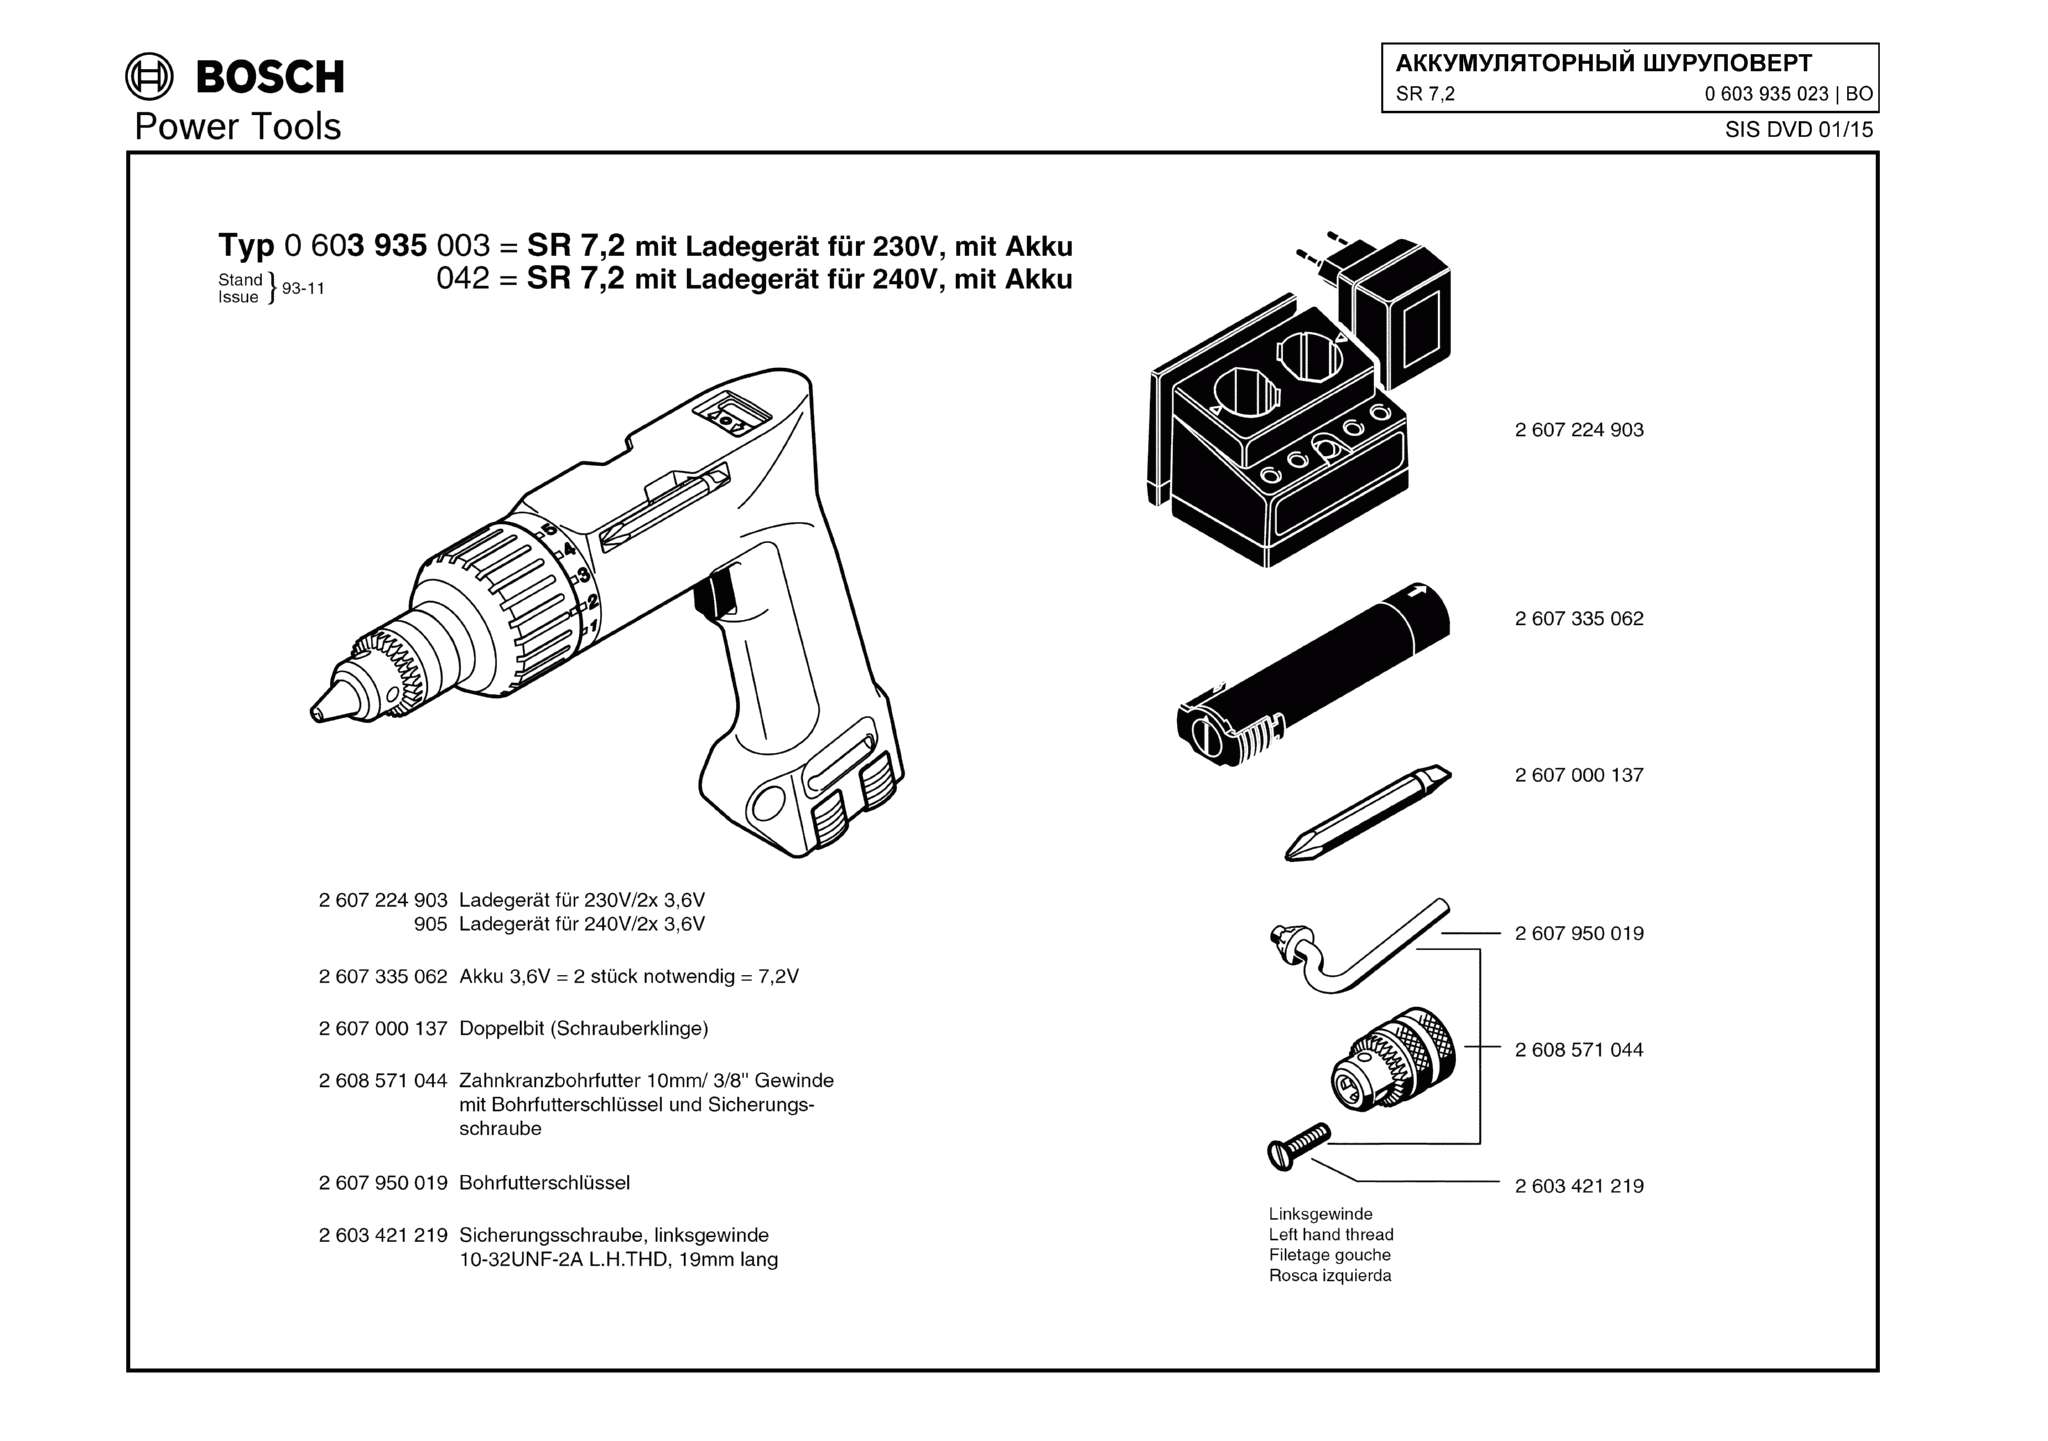 Запчасти, схема и деталировка Bosch SR 7,2 (ТИП 0603935023)